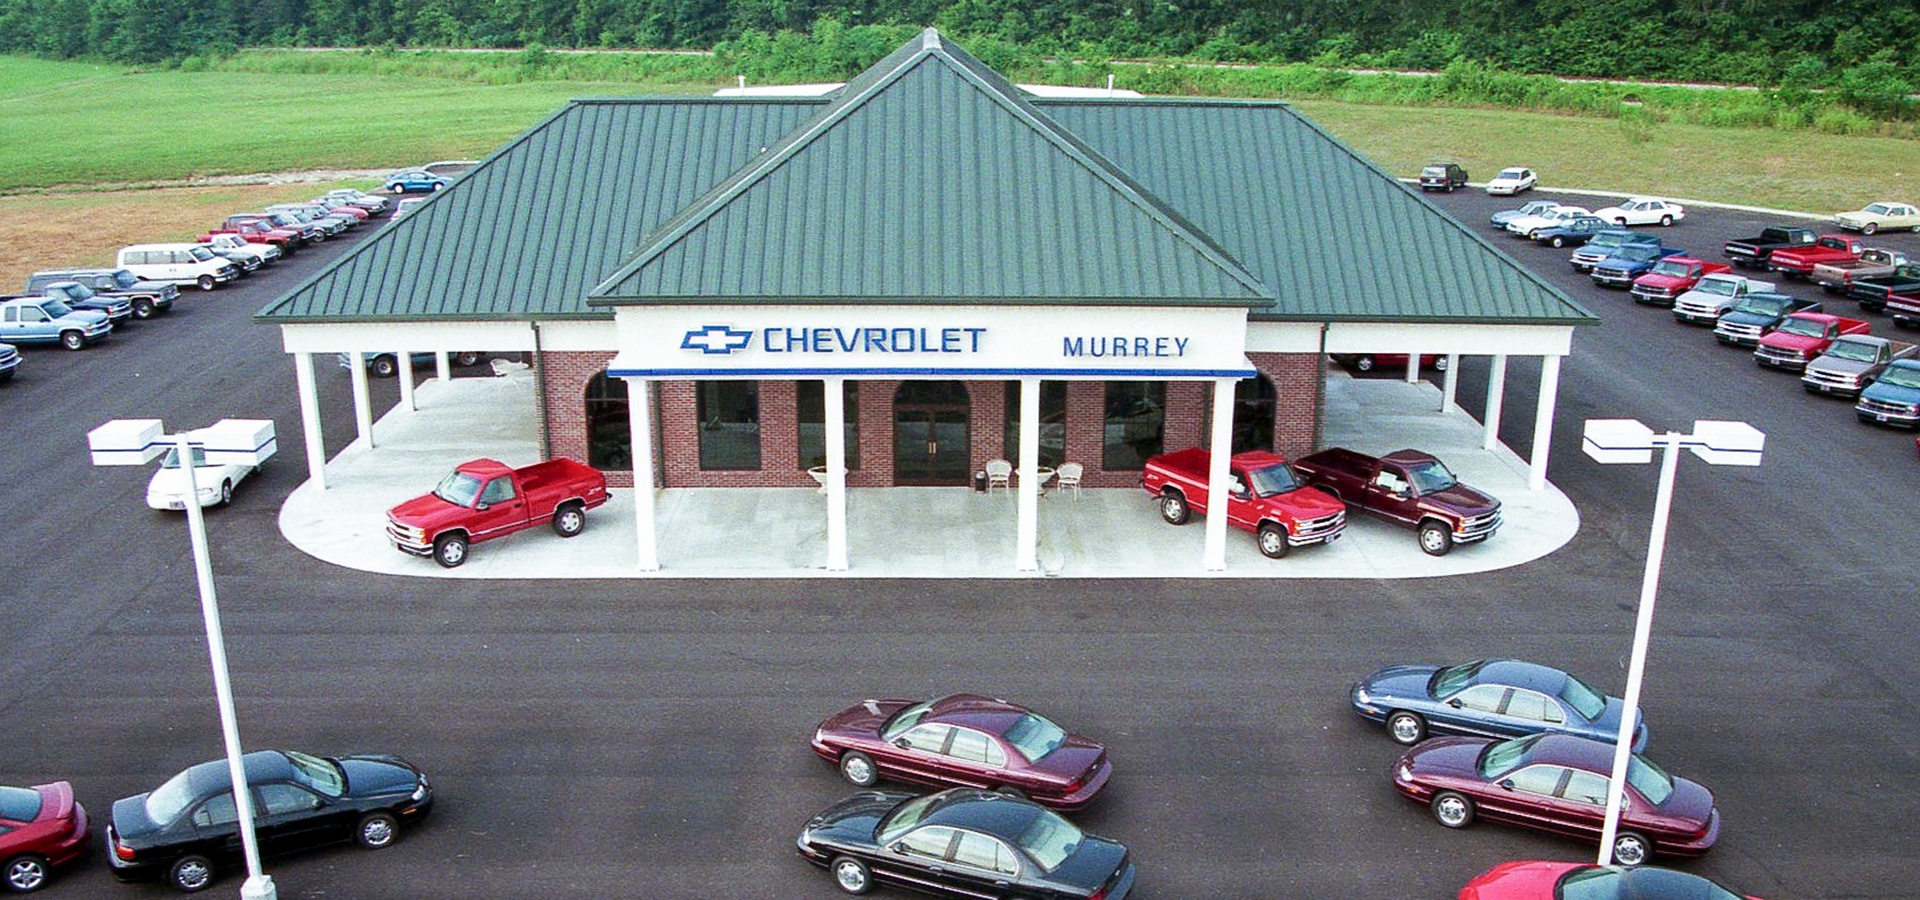 Murry Chevrolet | Pulaski, Tennessee | Brindley Construction, LLC.